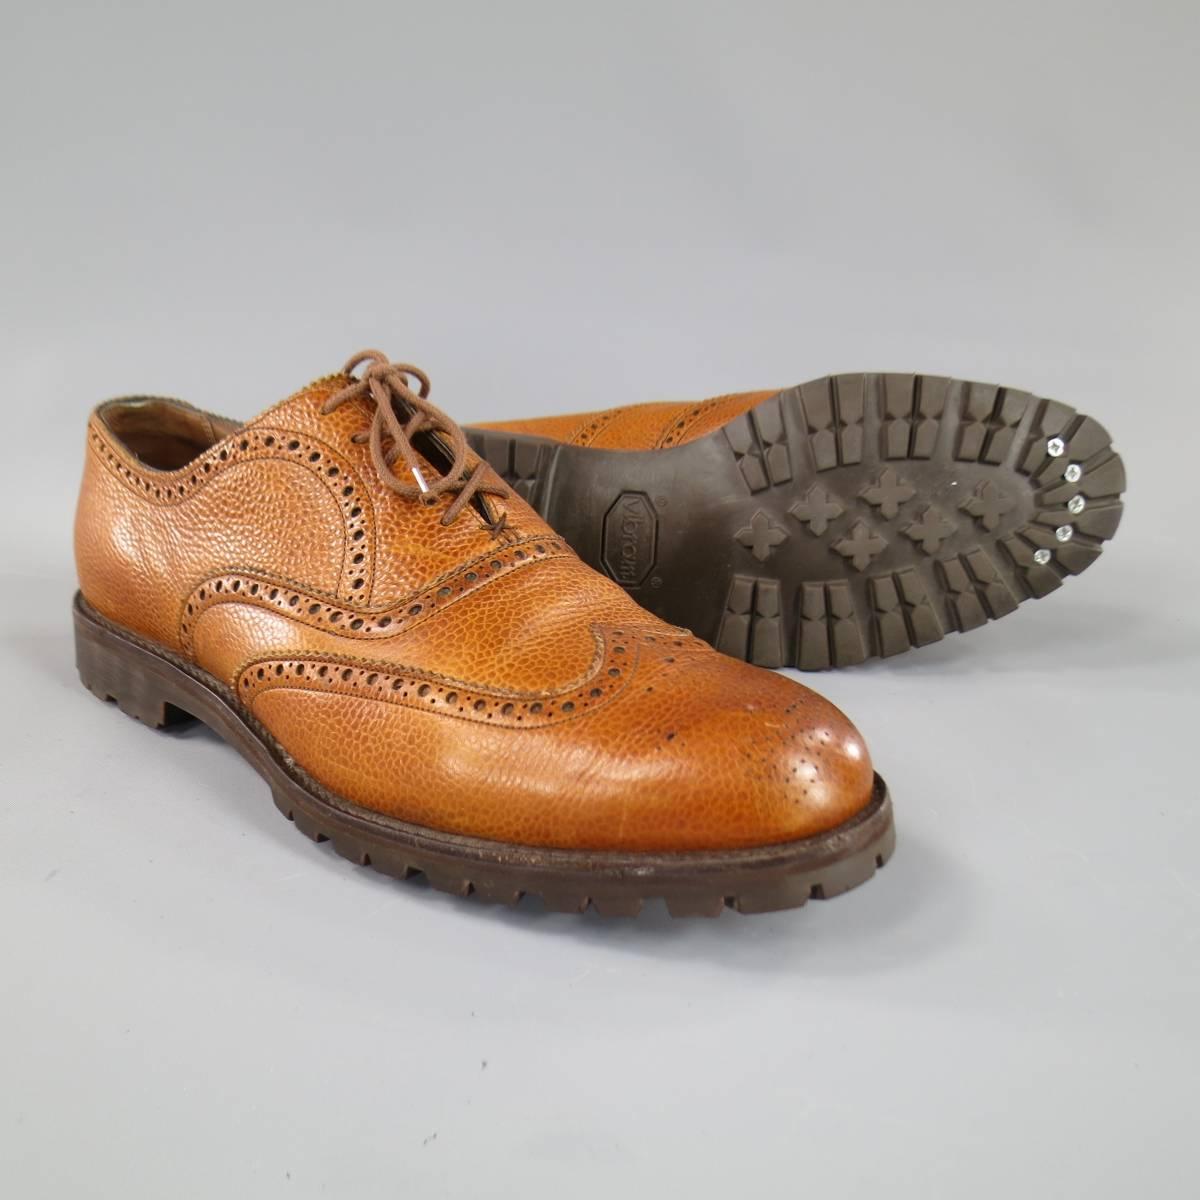 dress shoes with vibram soles